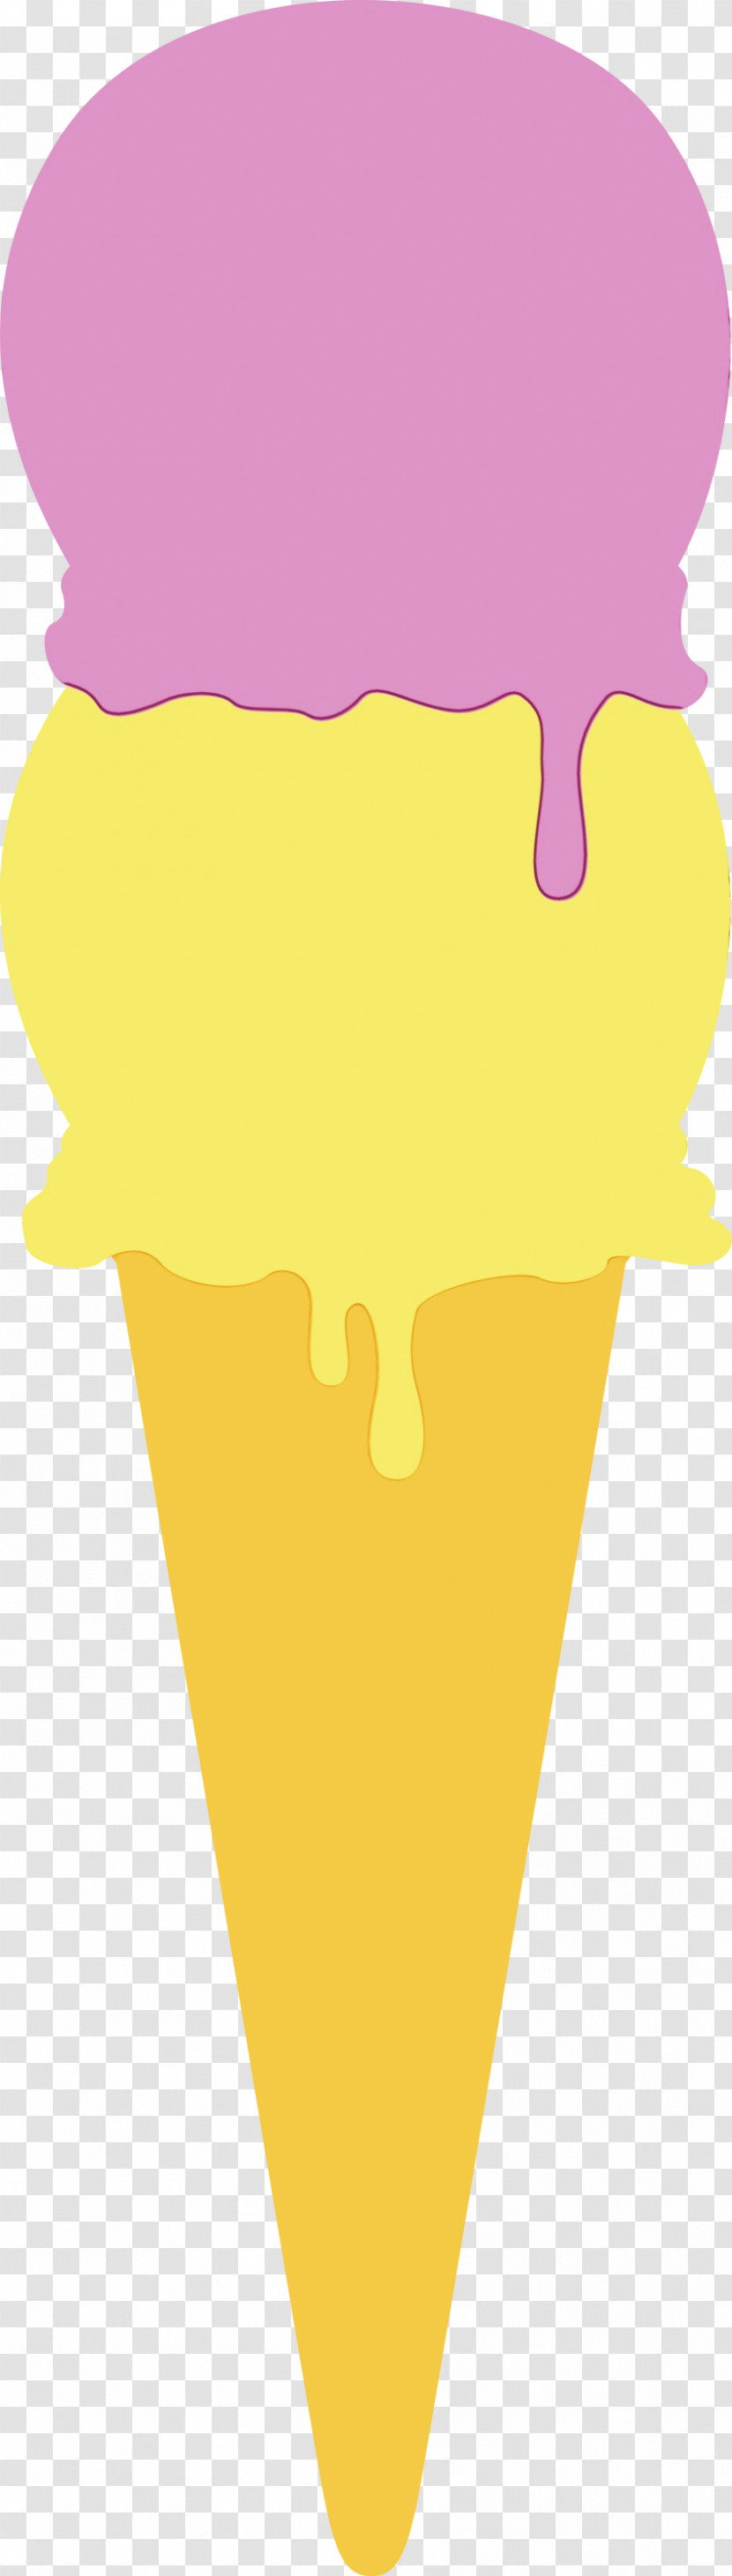 Ice Cream Cone Cartoon Yellow Line Violet Transparent PNG